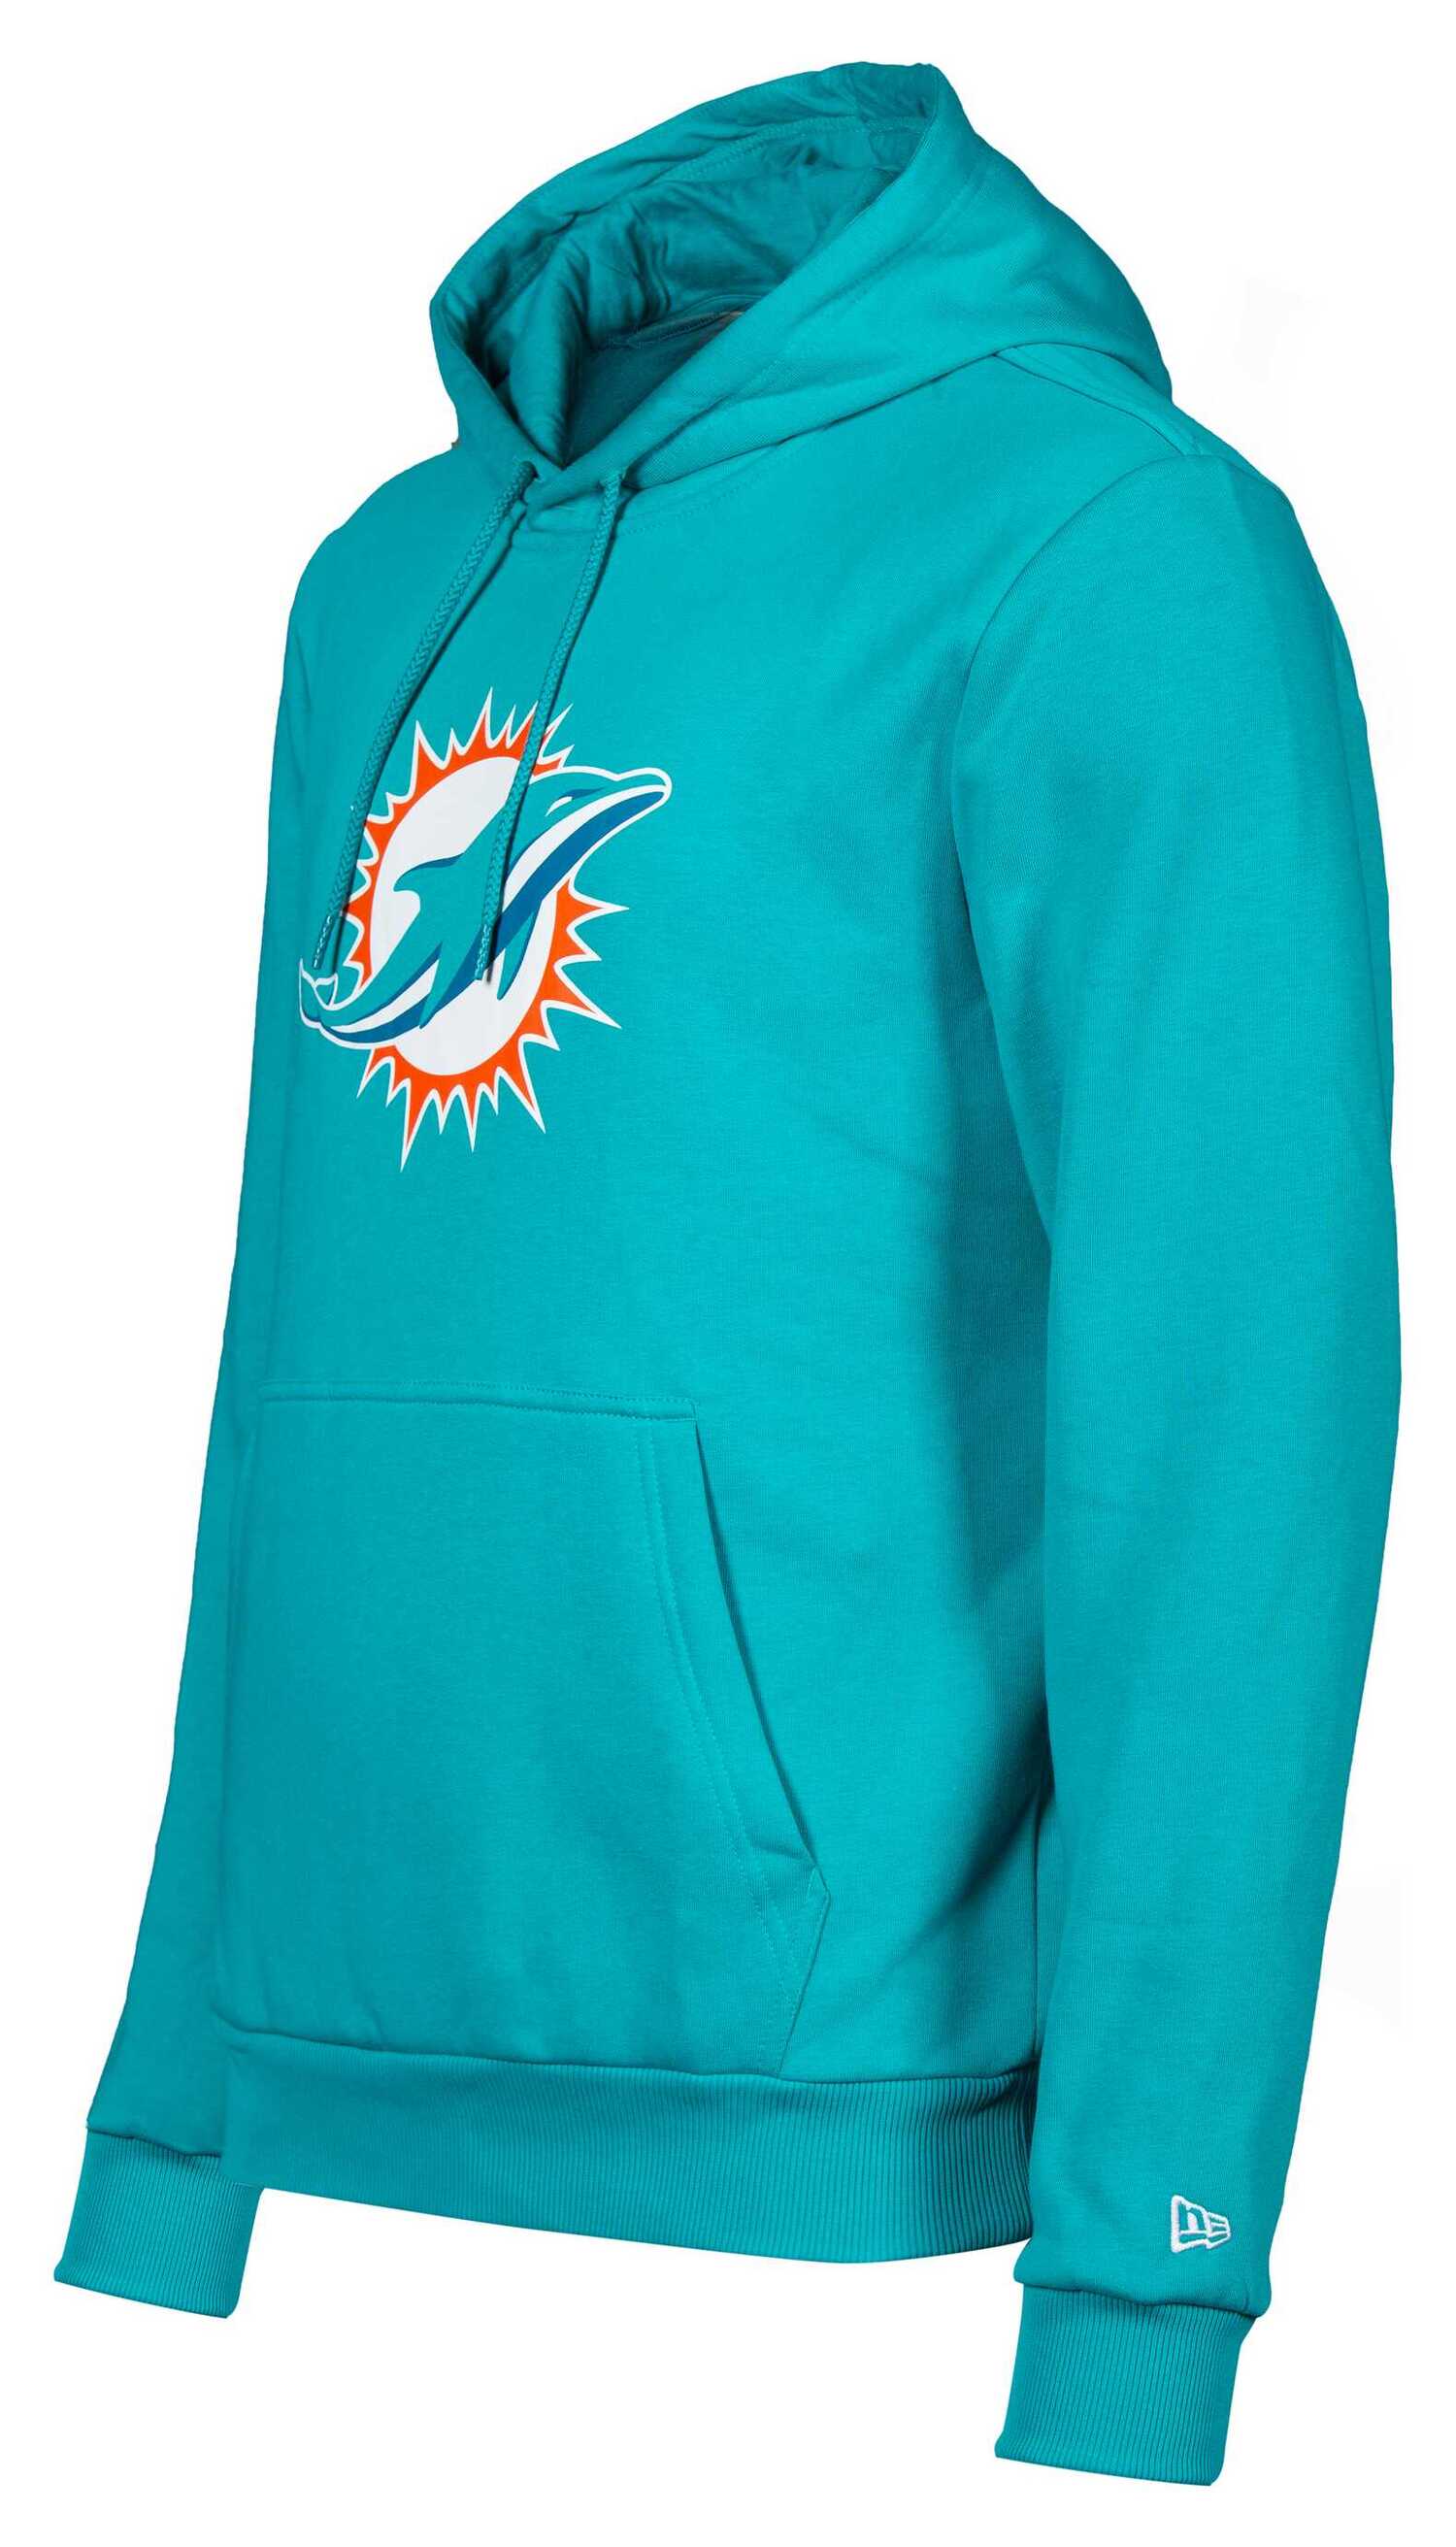 New Era - NFL Miami Dolphins Team Logo and Name Hoodie